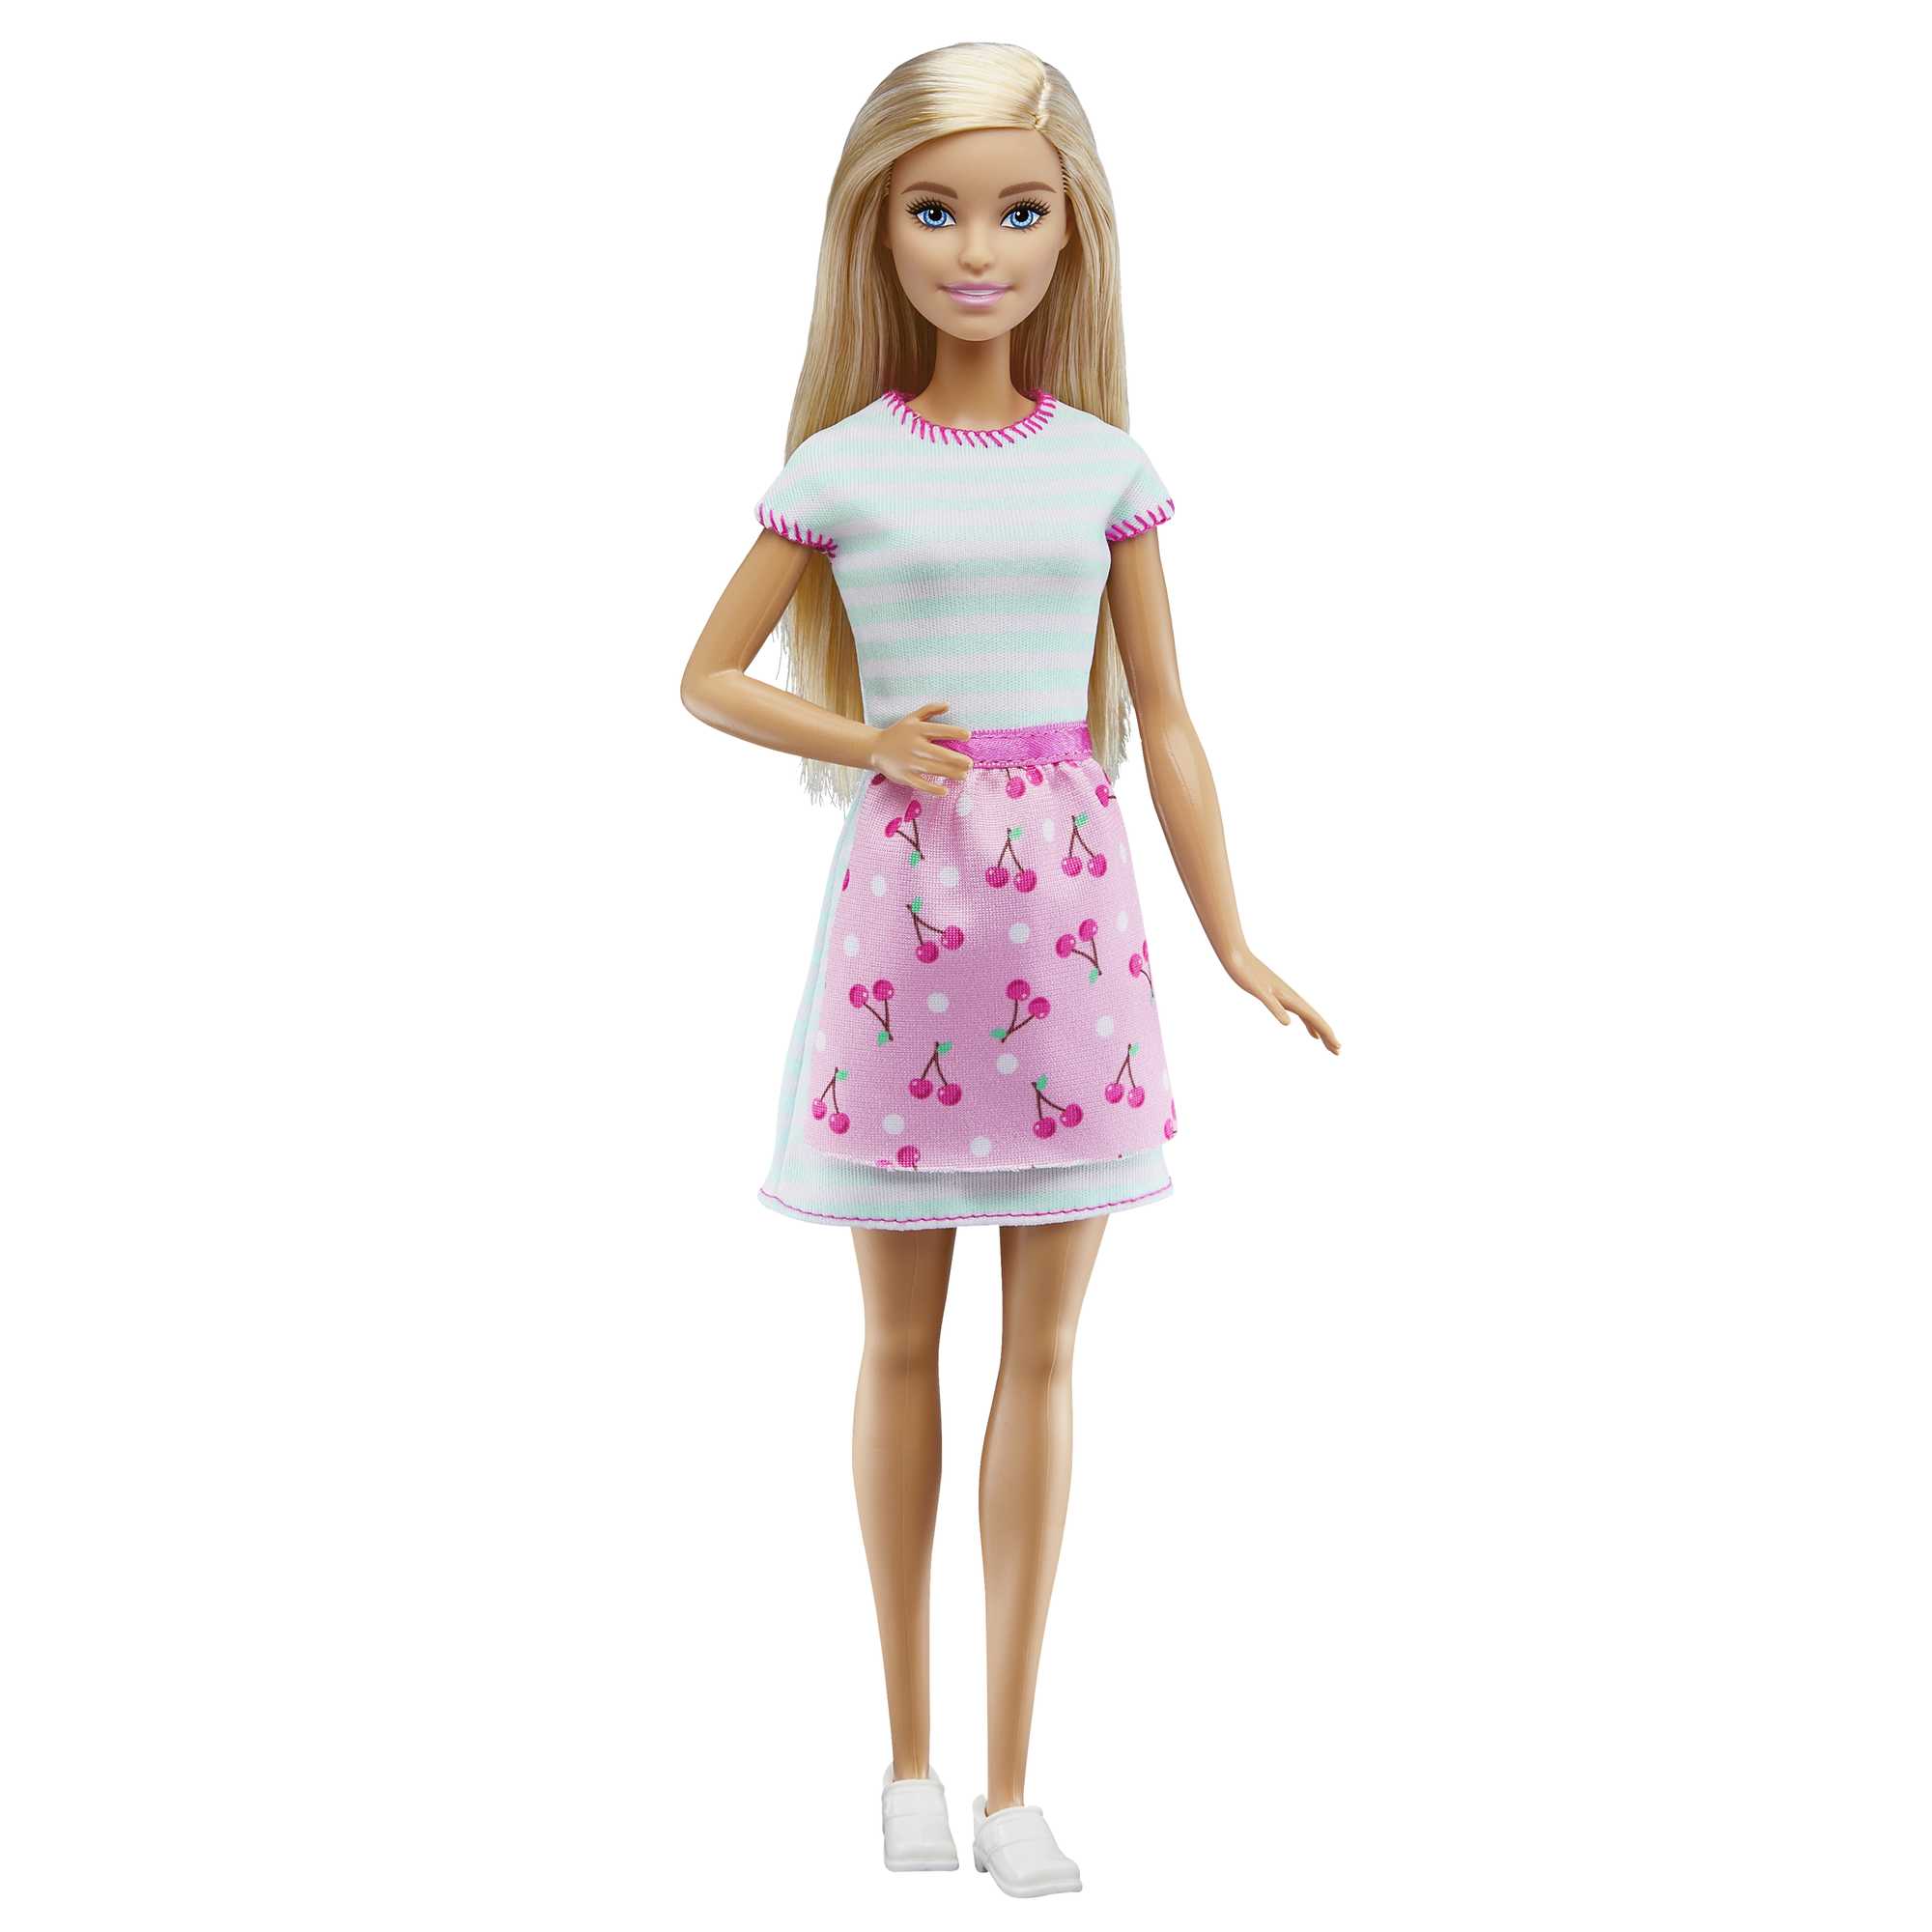 Mattel Barbie dolls Sisters' Baking Fun